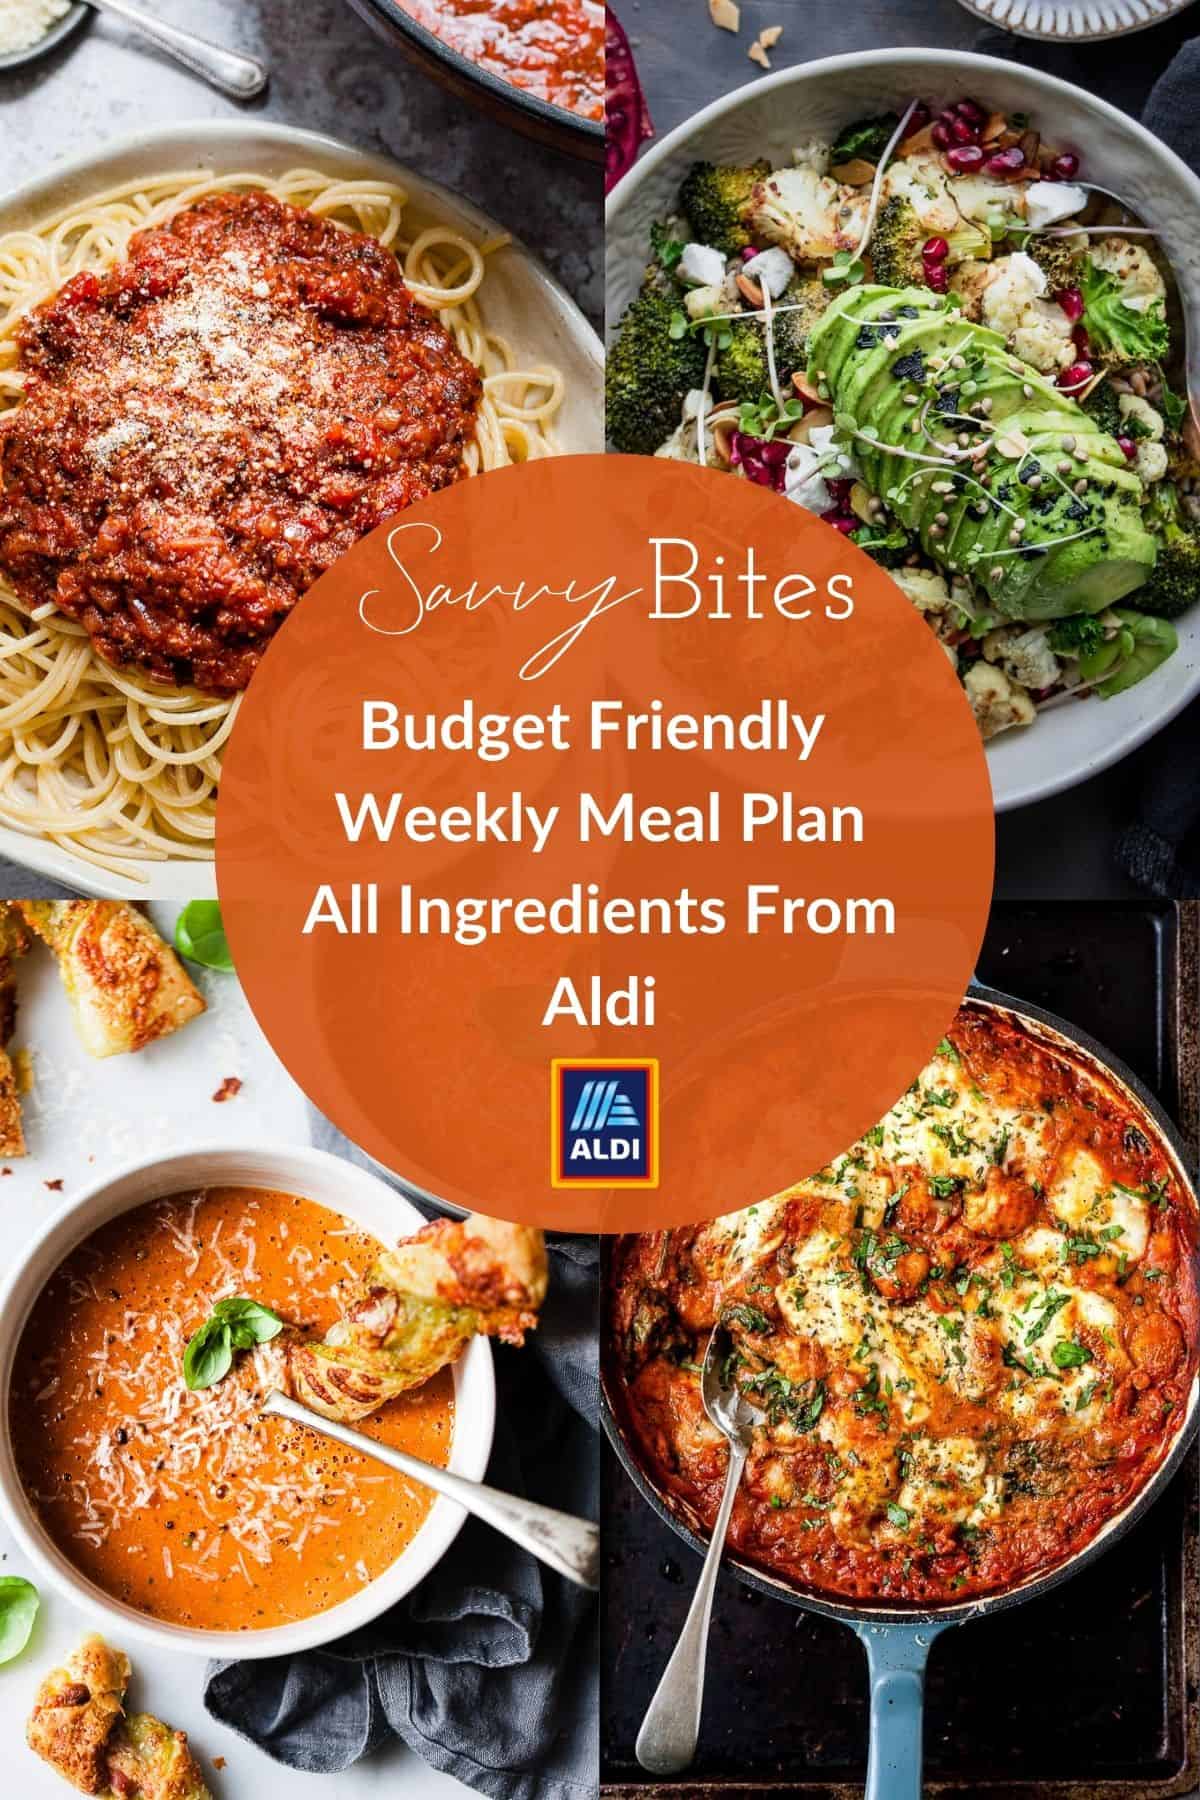 Aldi vegetarian budget meal planner photo collage.